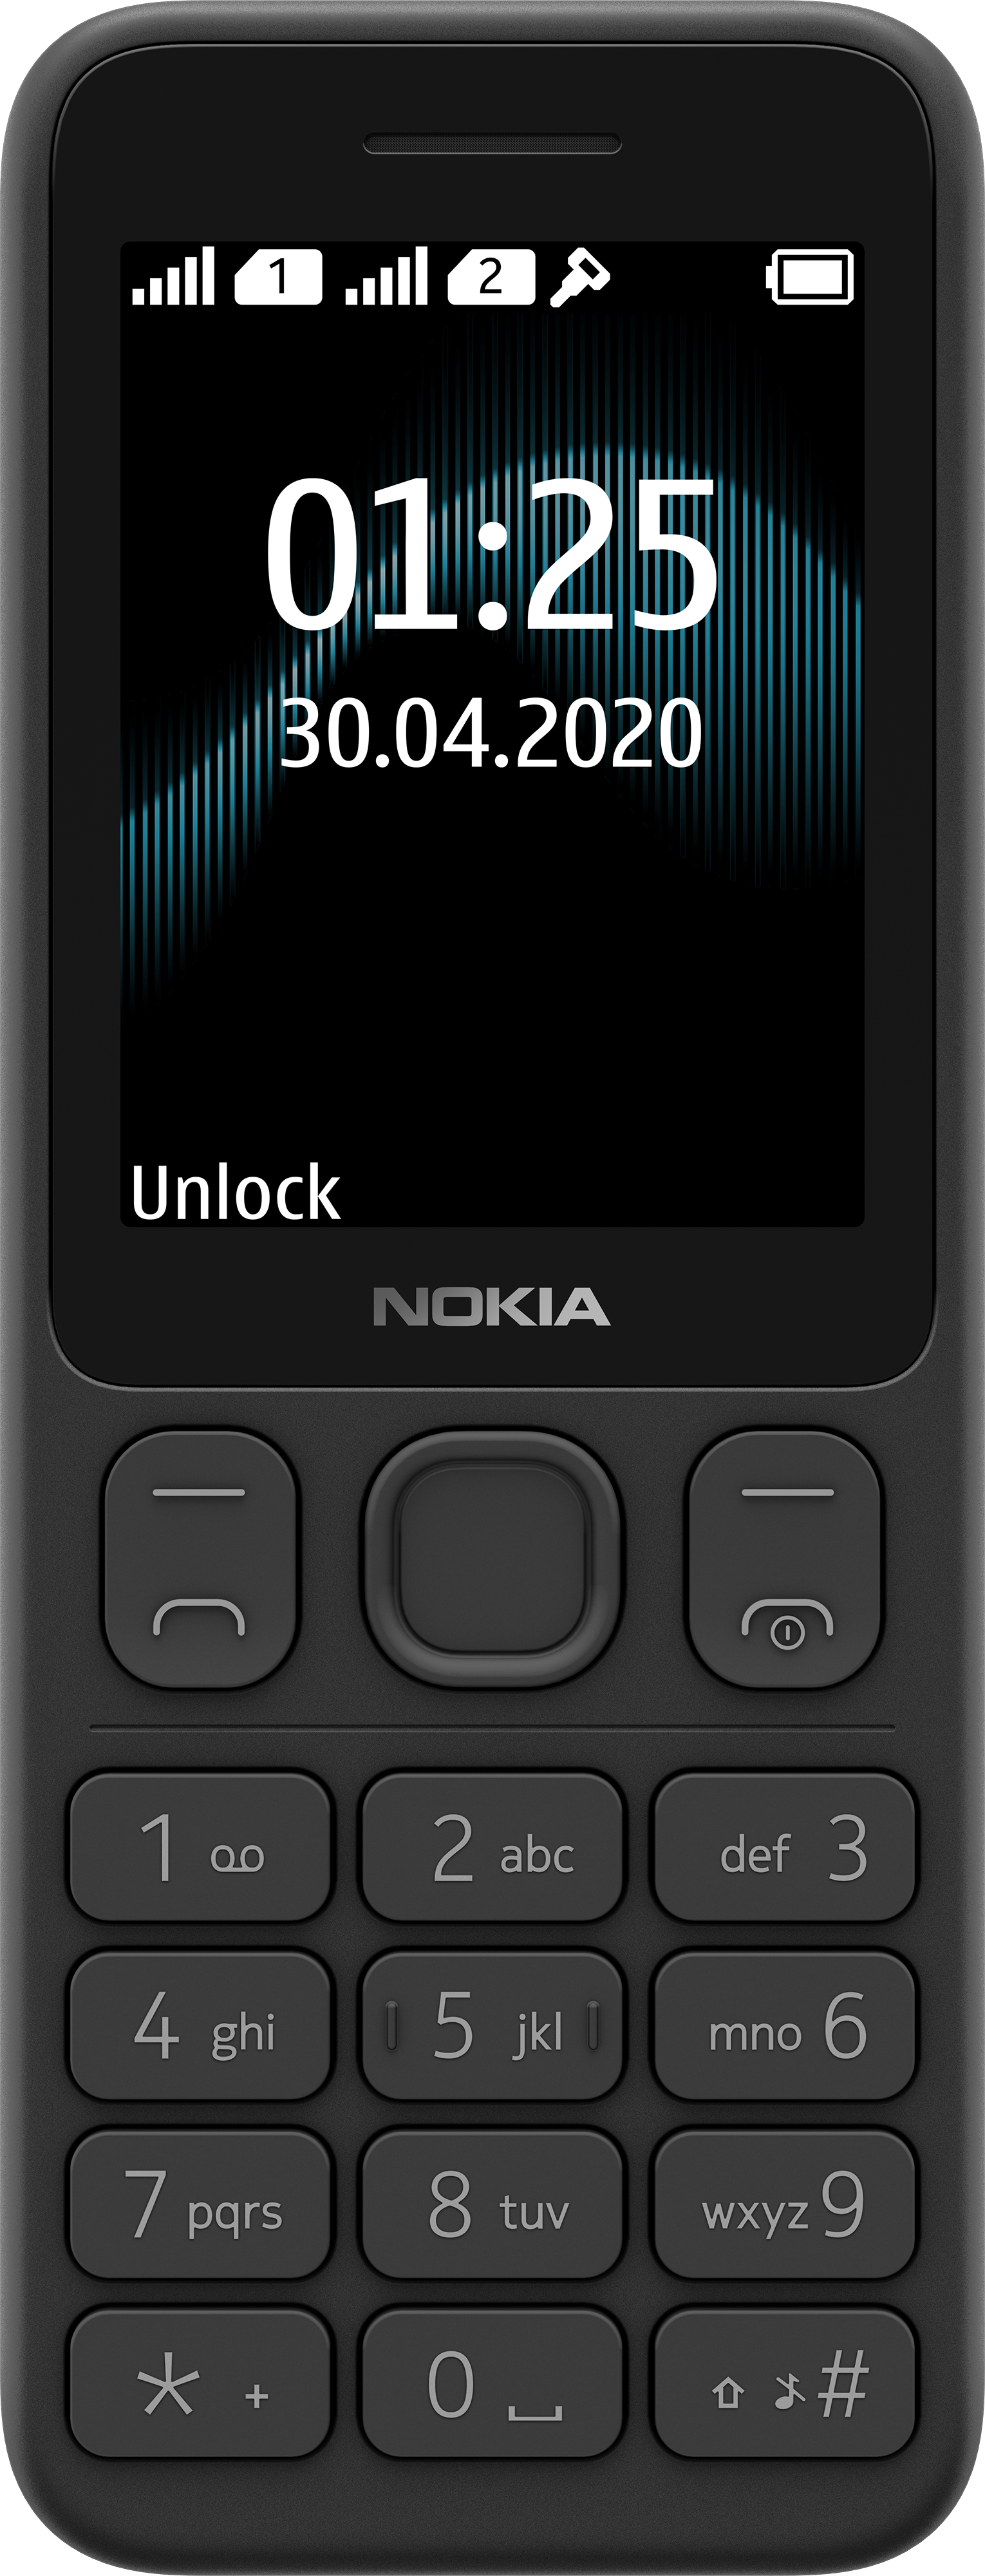 Nokia 125 Mobile Phone With Wireless Fm Radio